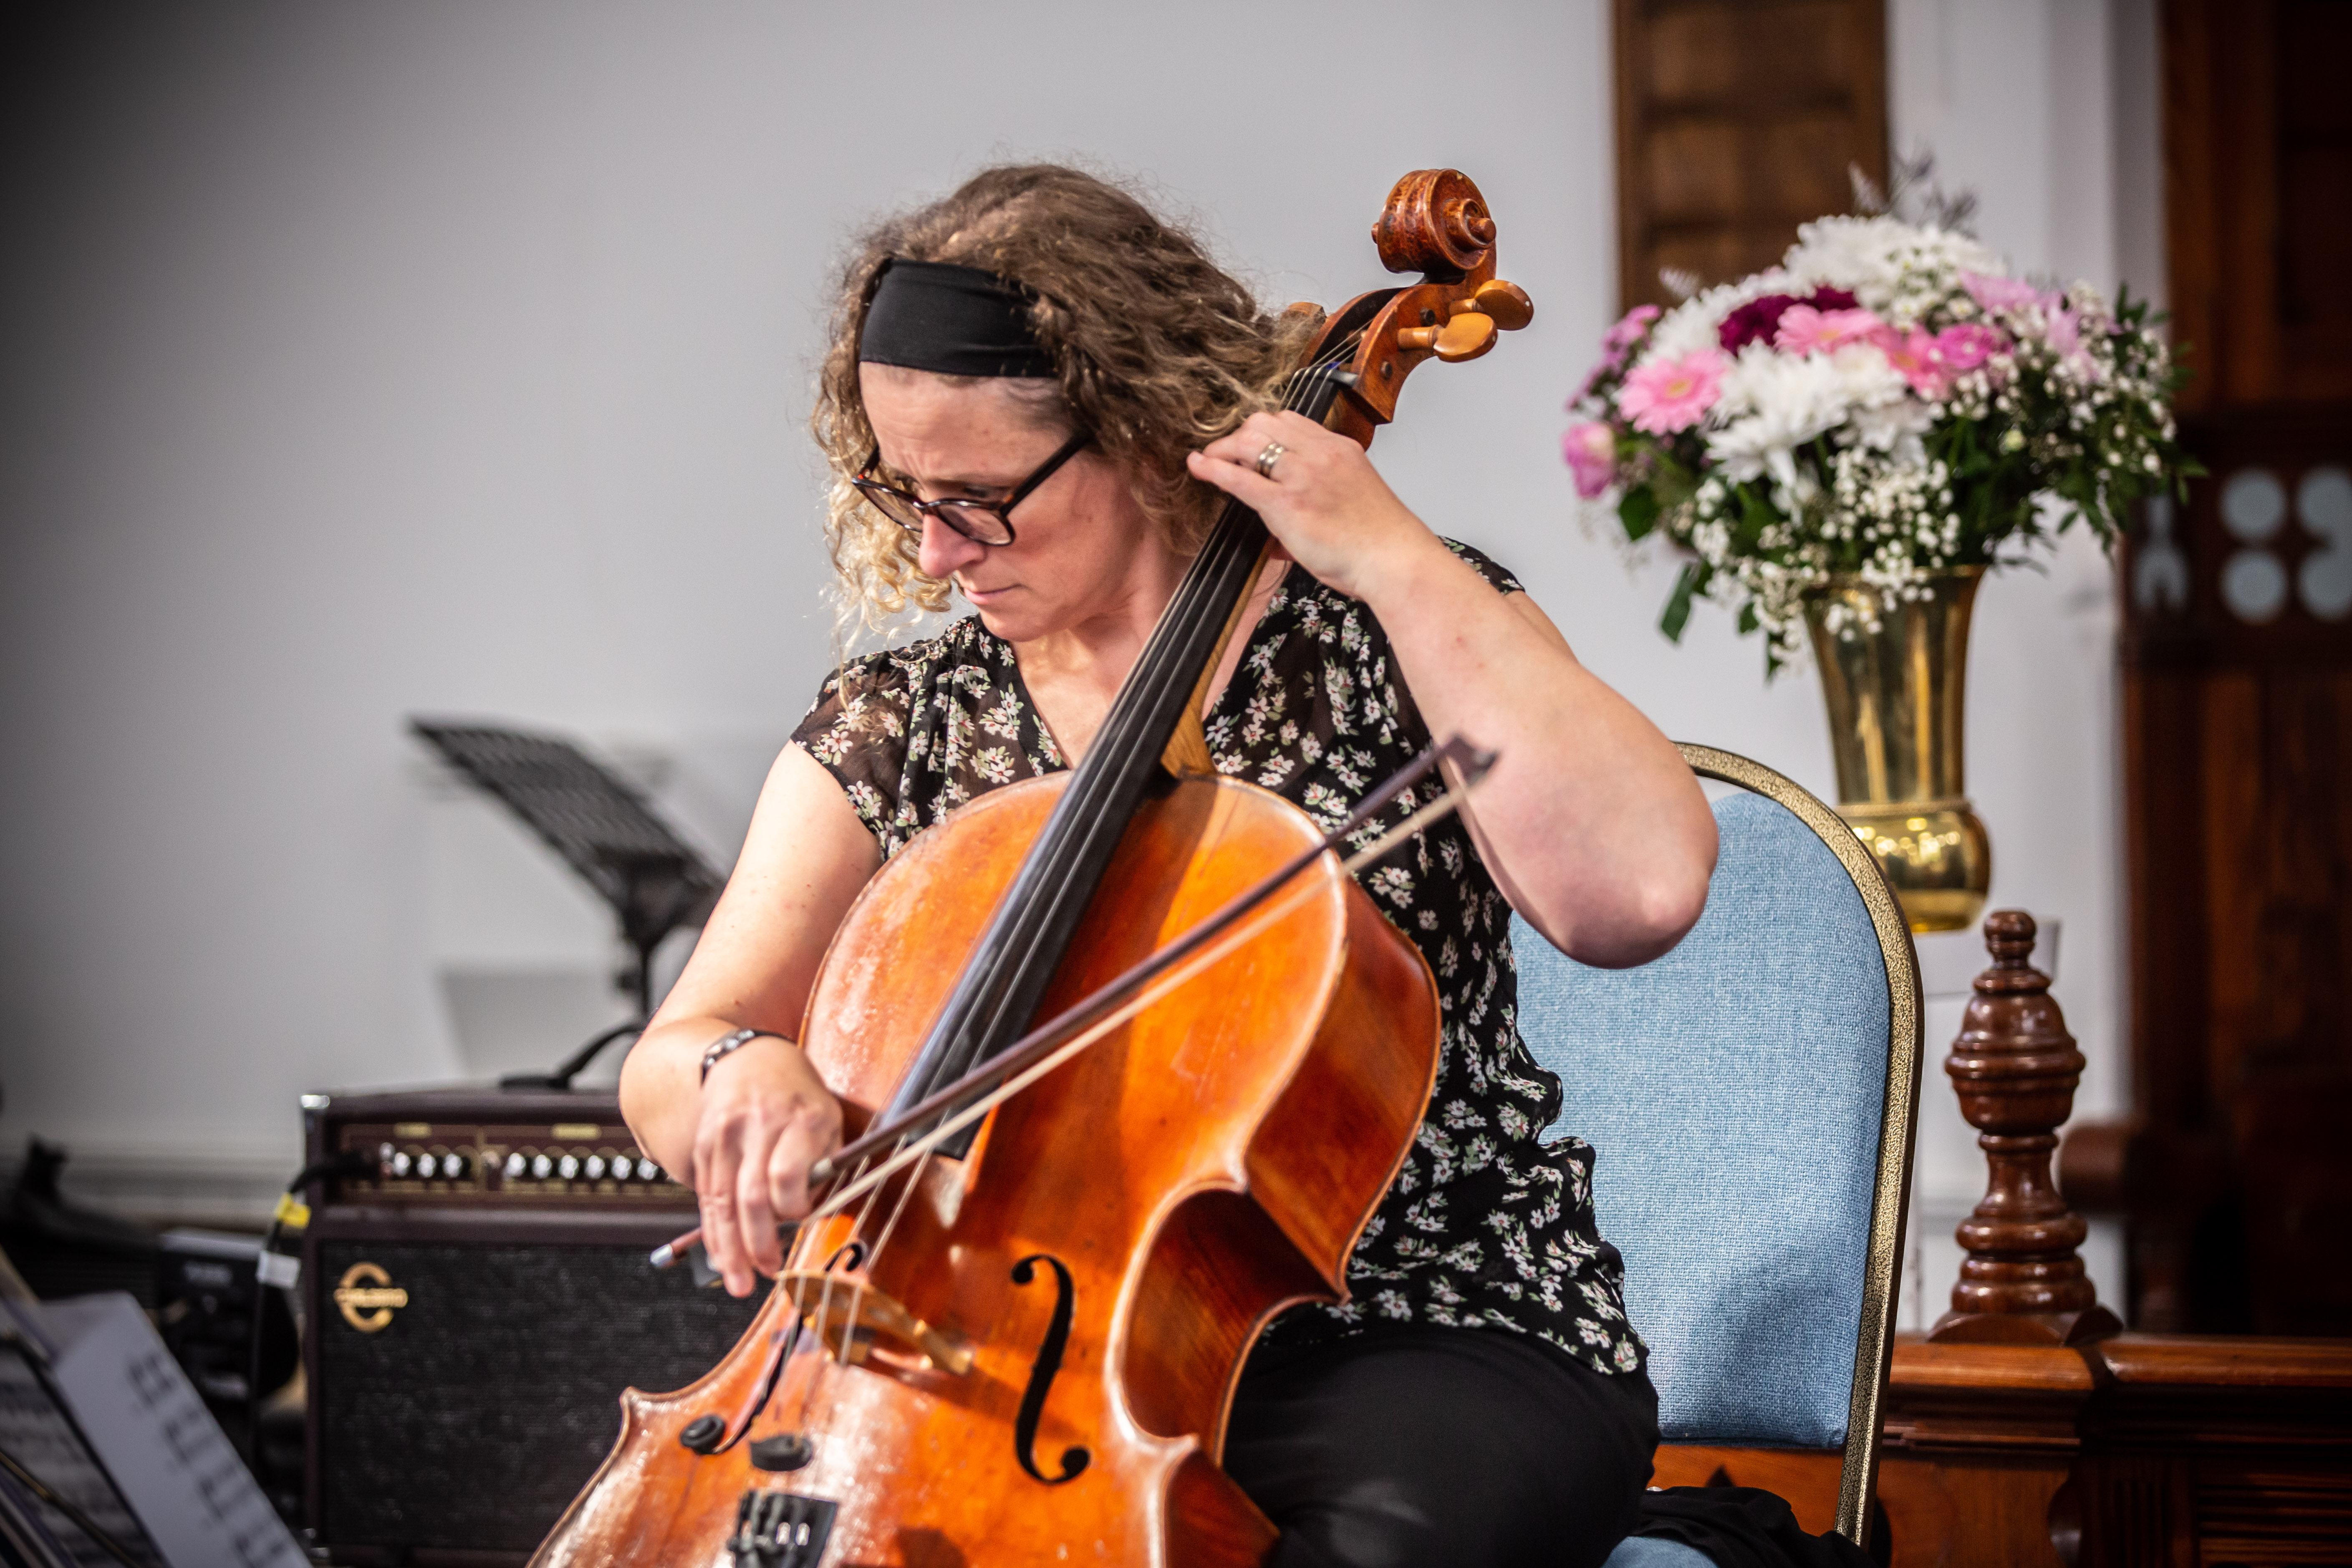 Cello: Nicola Pearce